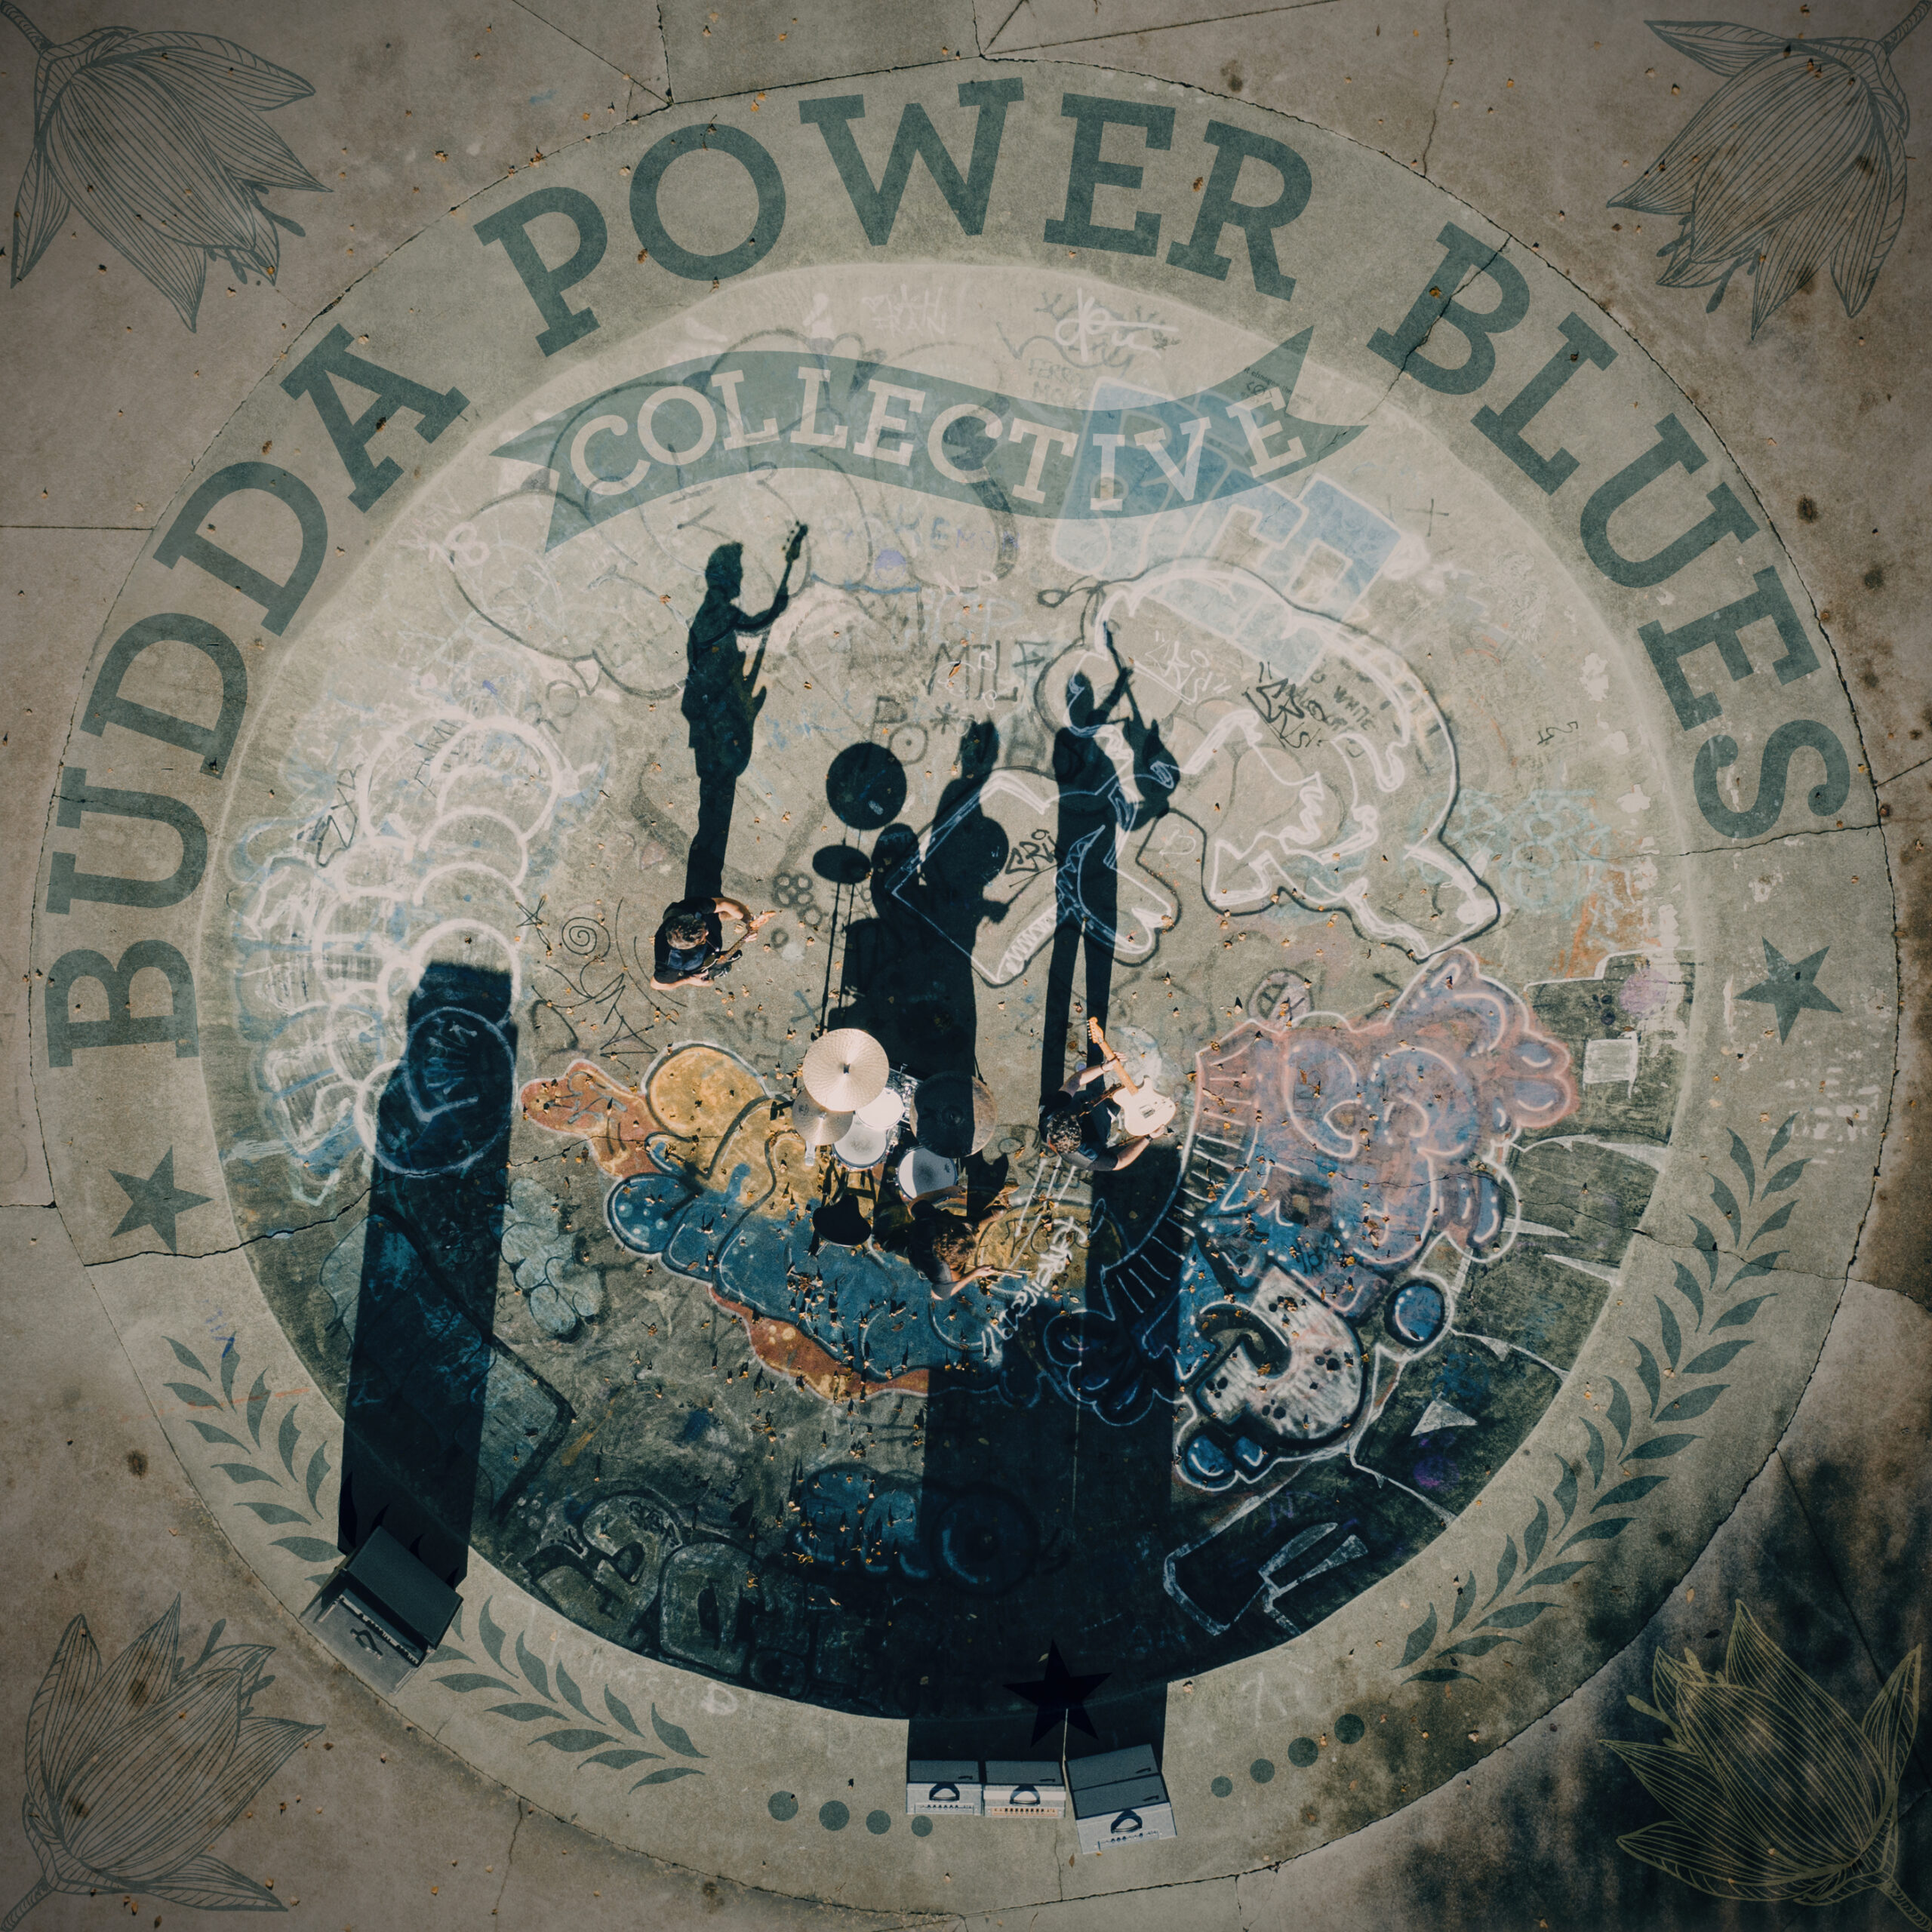 Budda Power Blues Collective